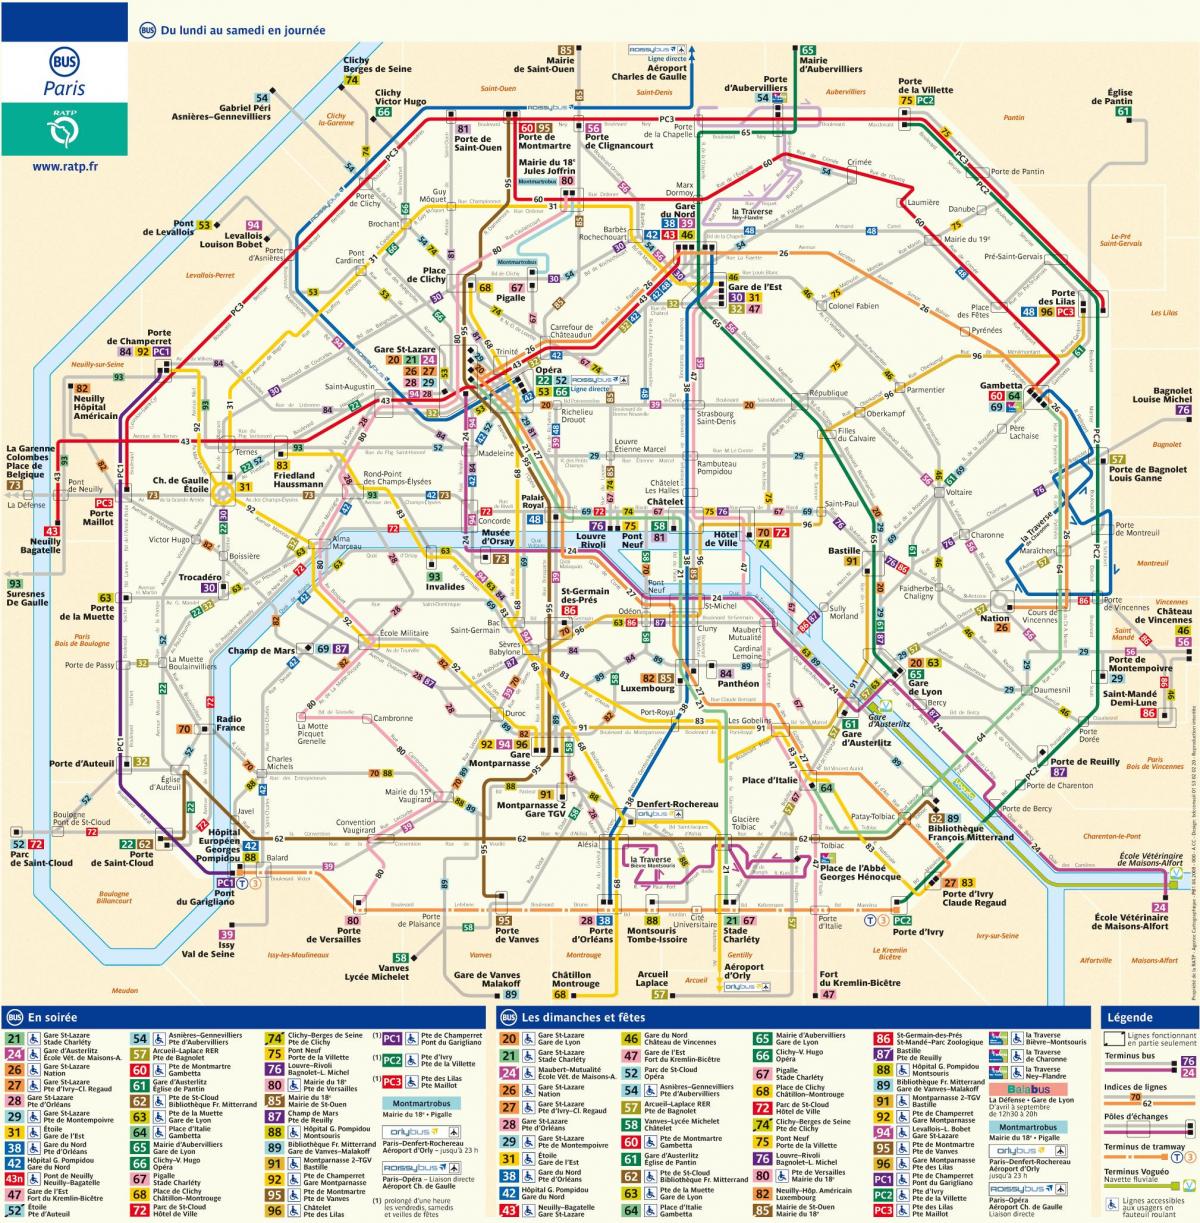 Peta dari RATP bus